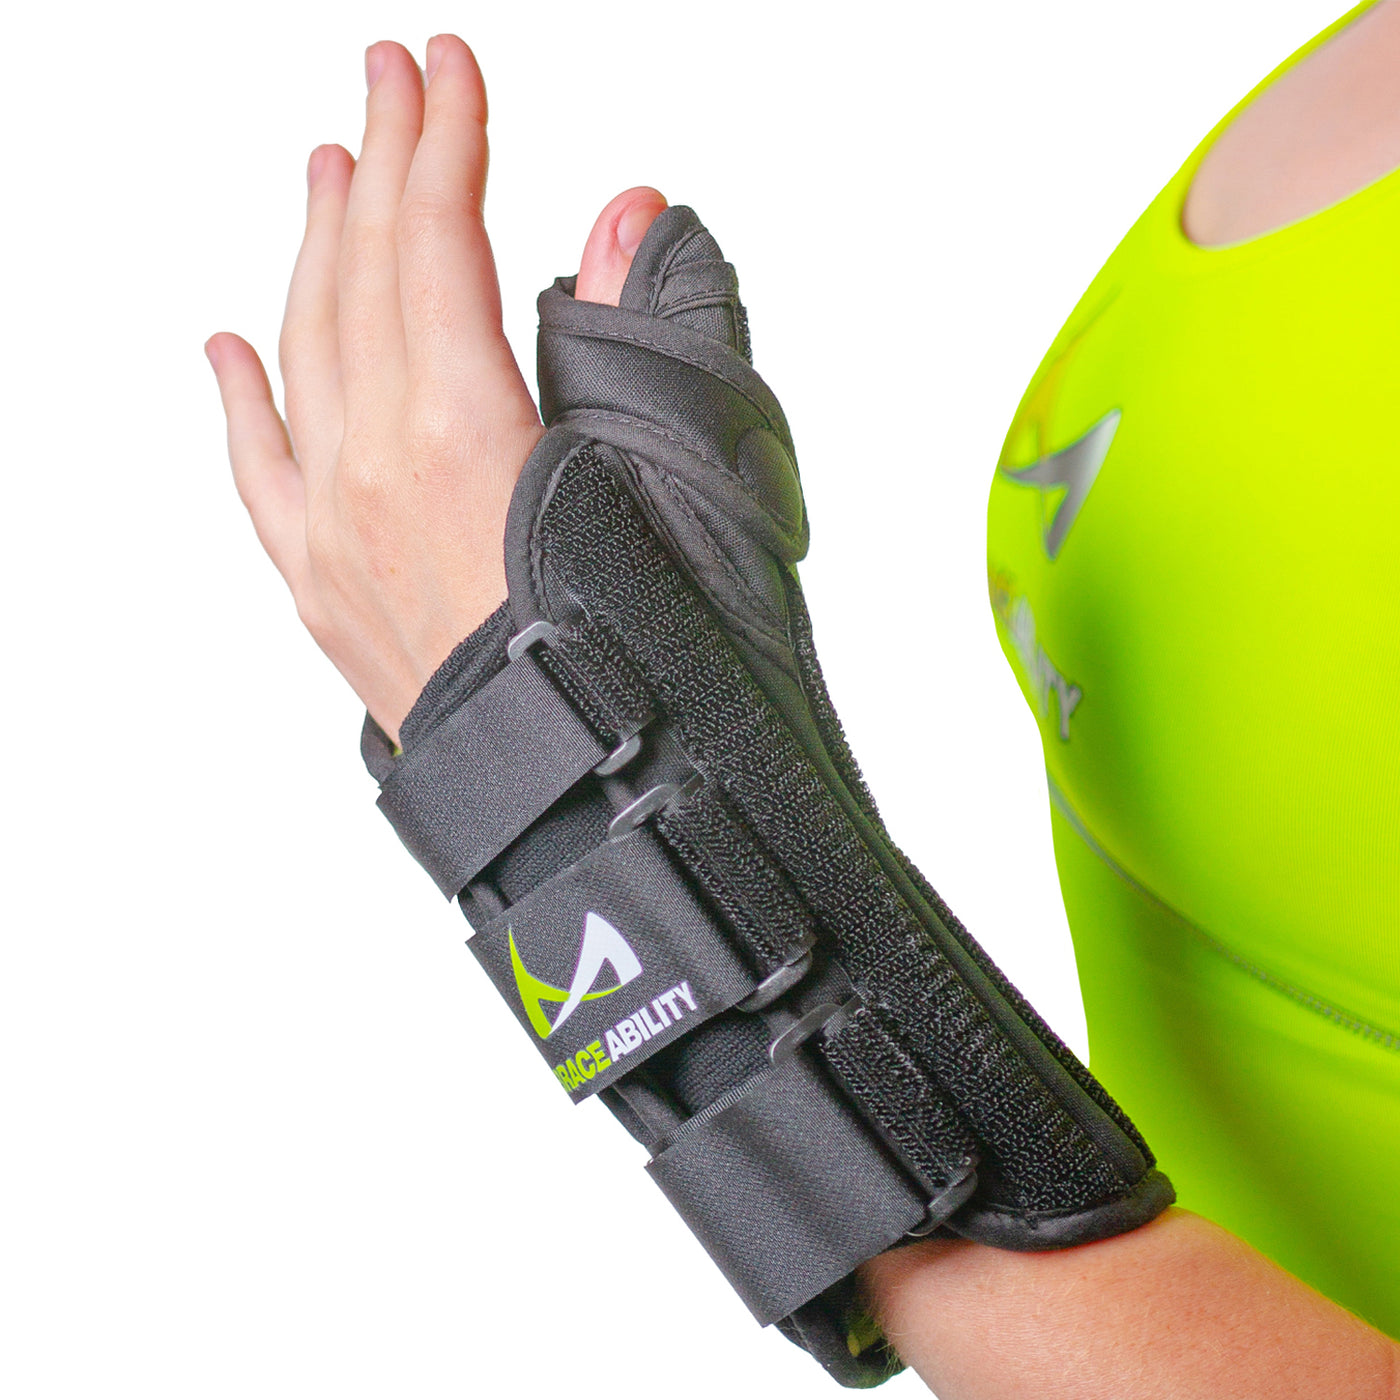 tendonitis thumb splint from braceability